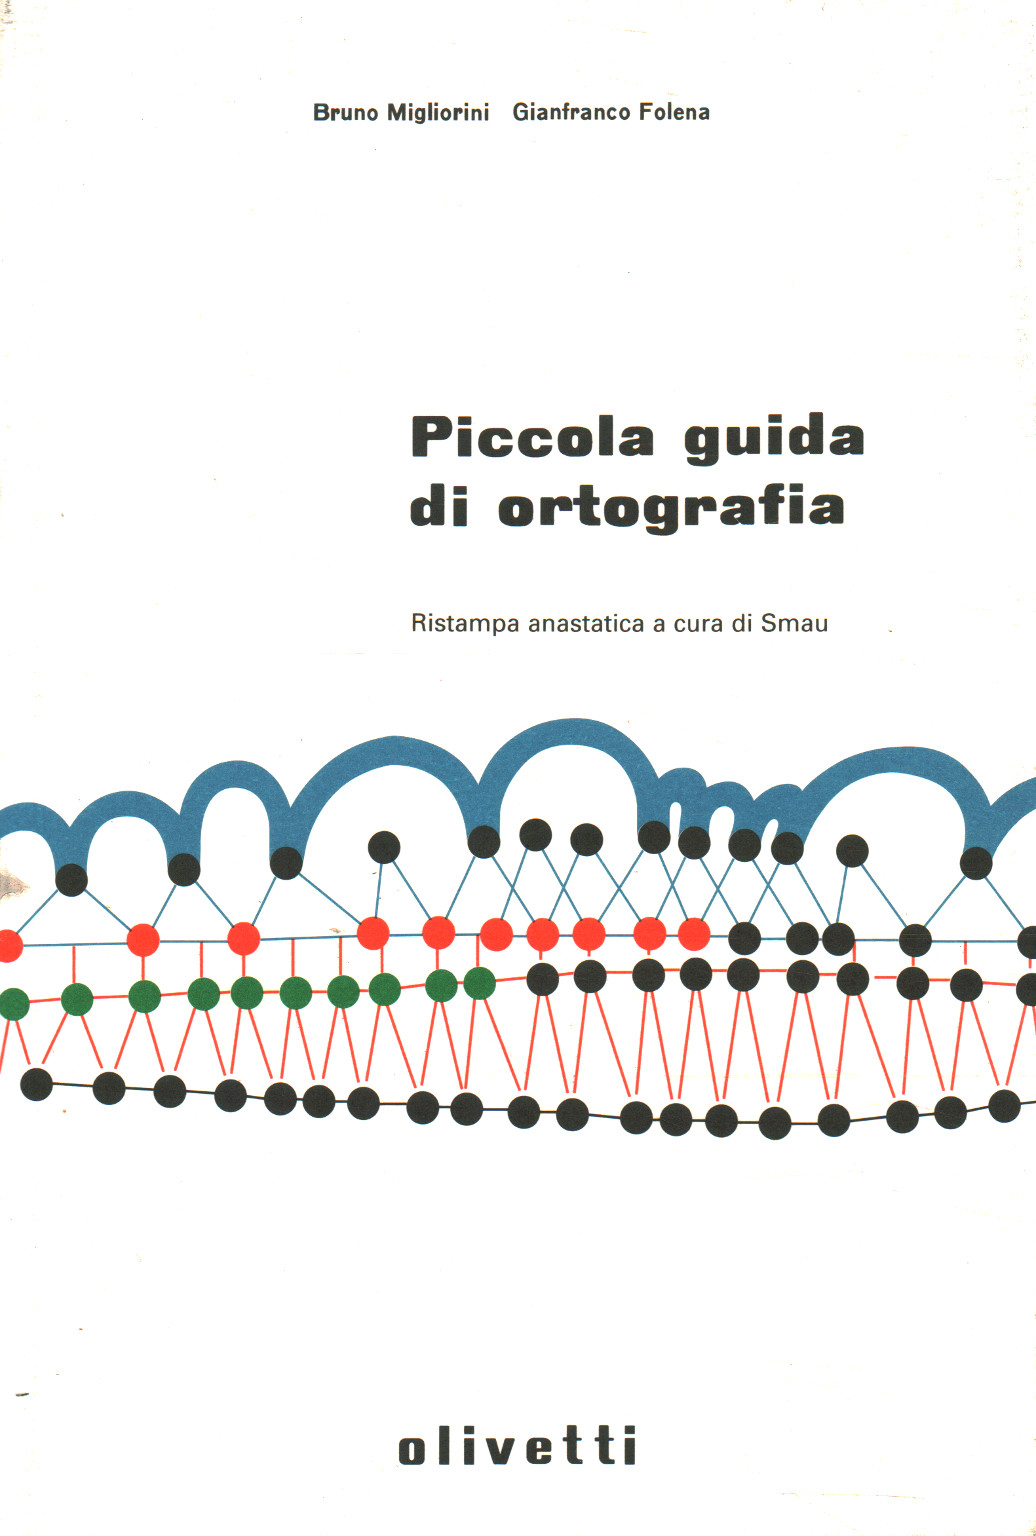 Petit guide orthographique, Bruno Migliorini Gianfranco Folena